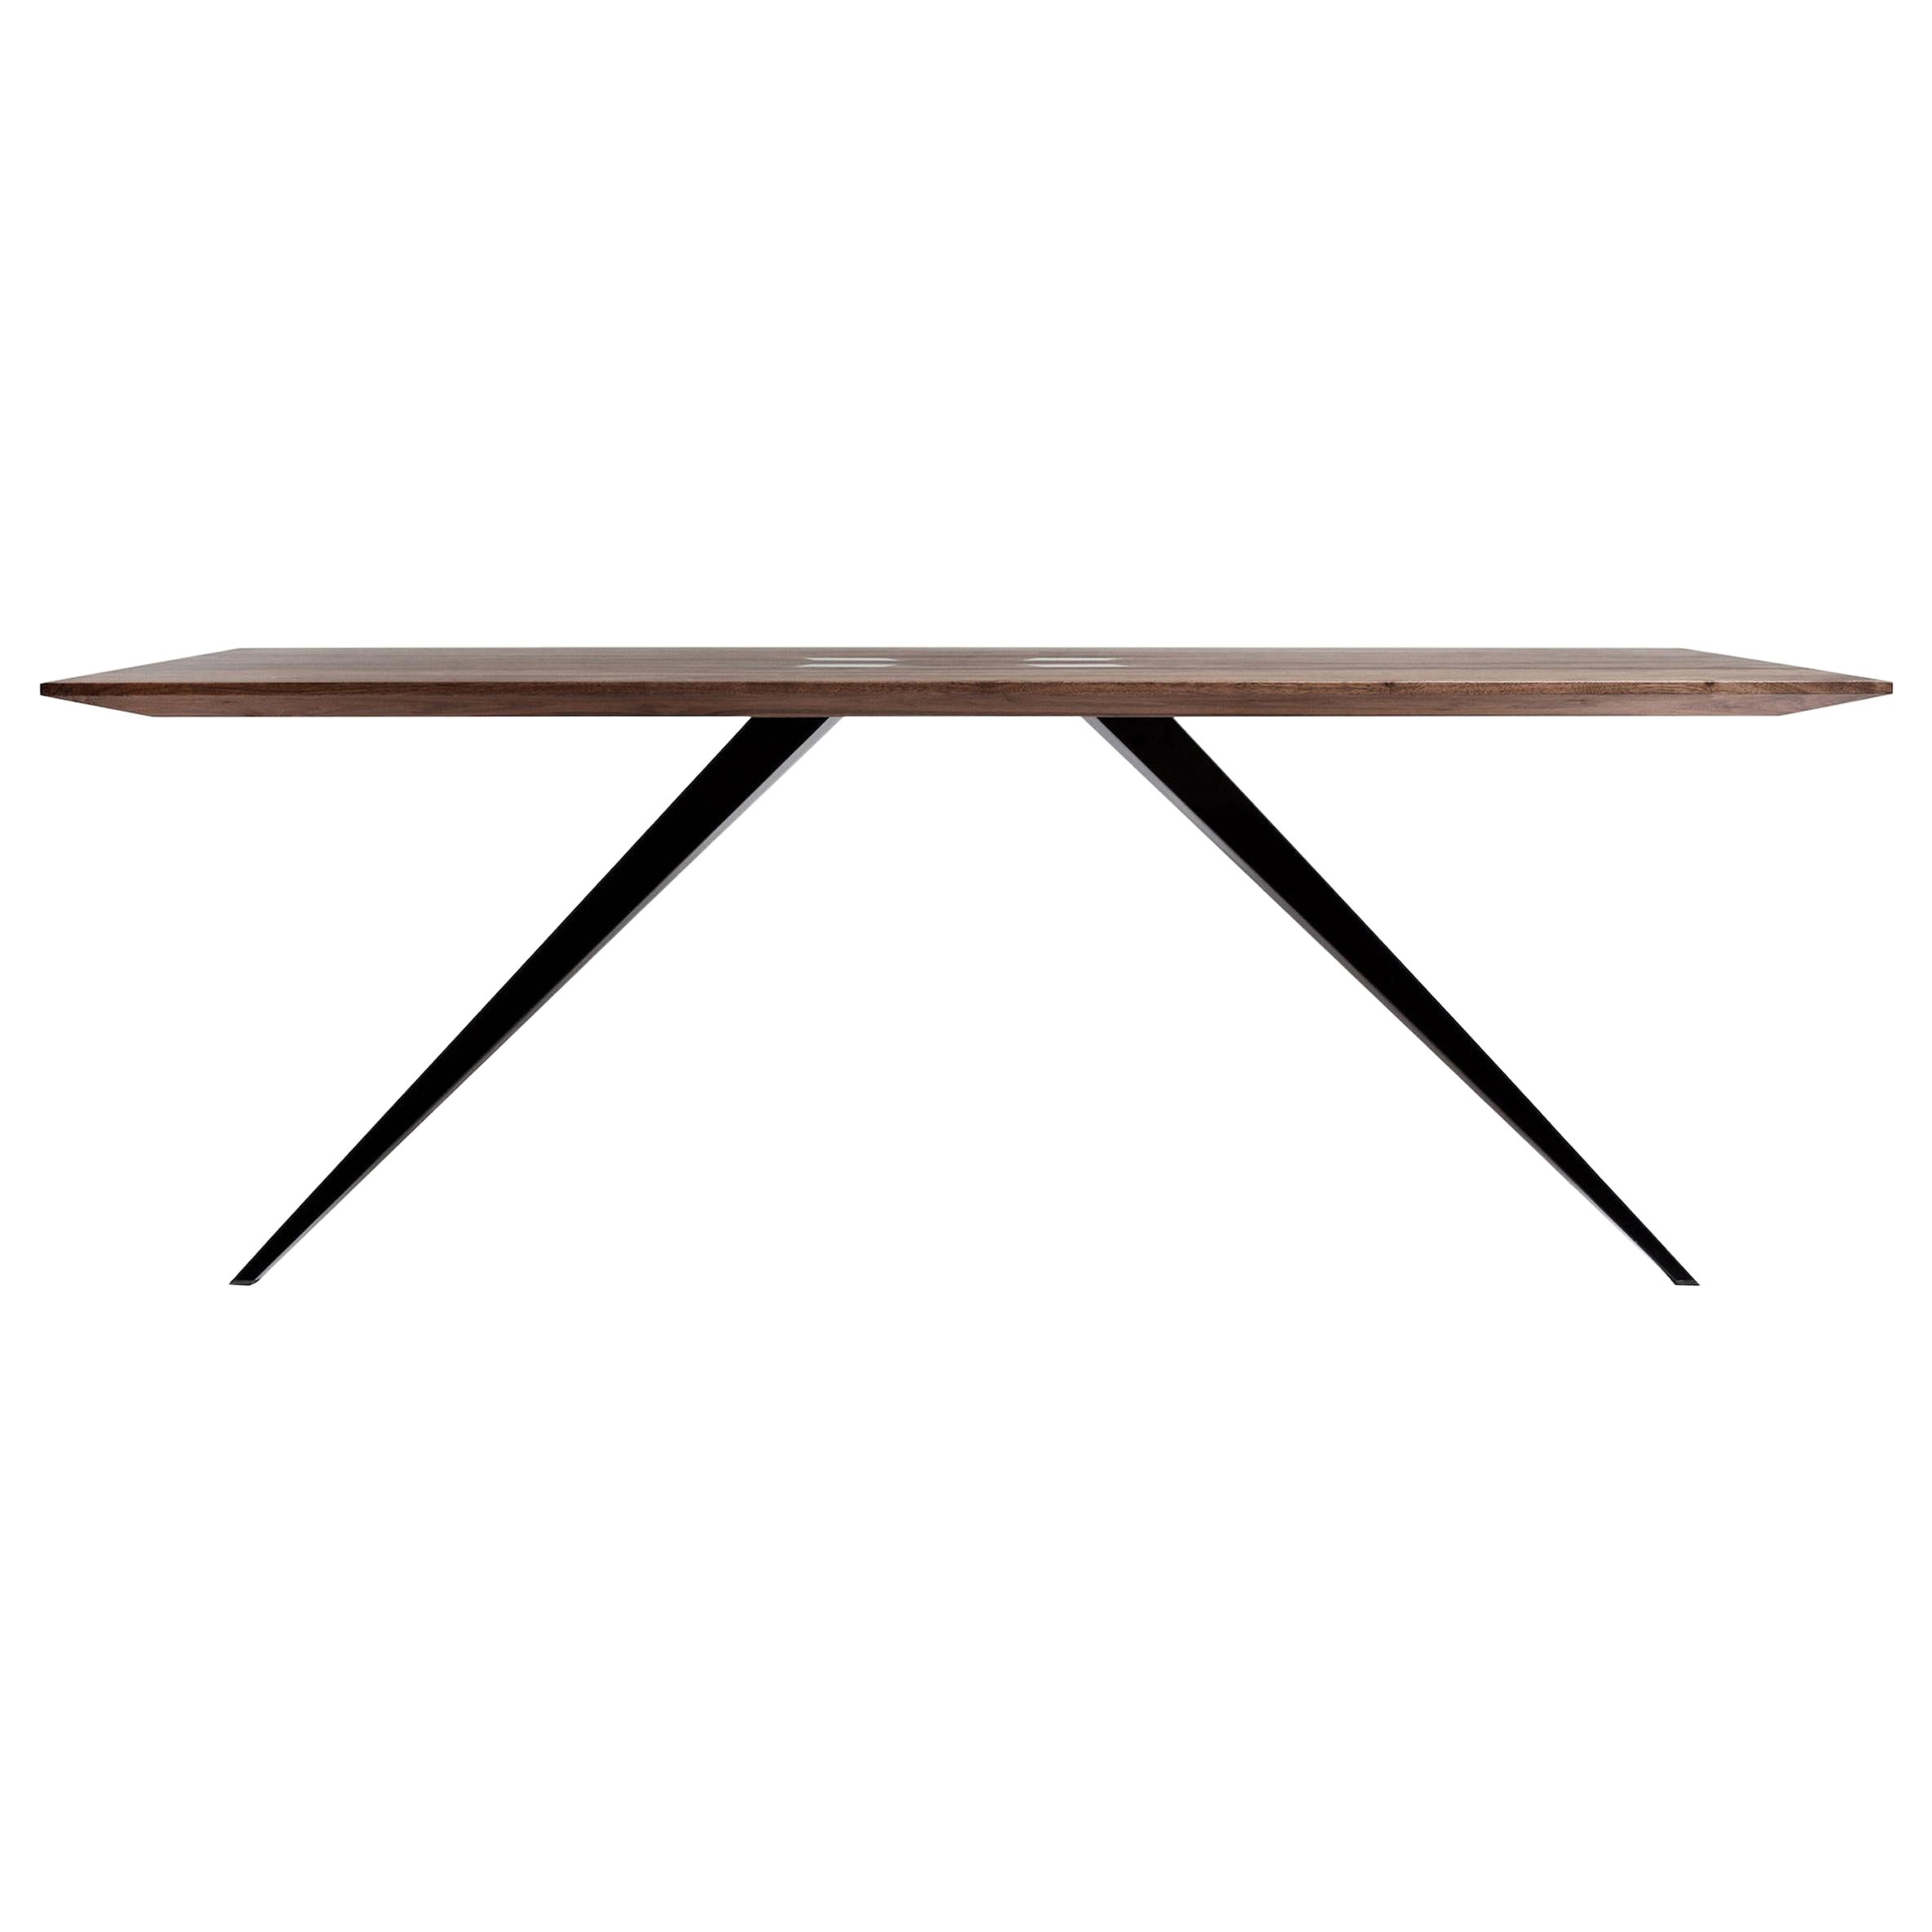 Walnut Table Bevel Edge Industrial Design For Sale